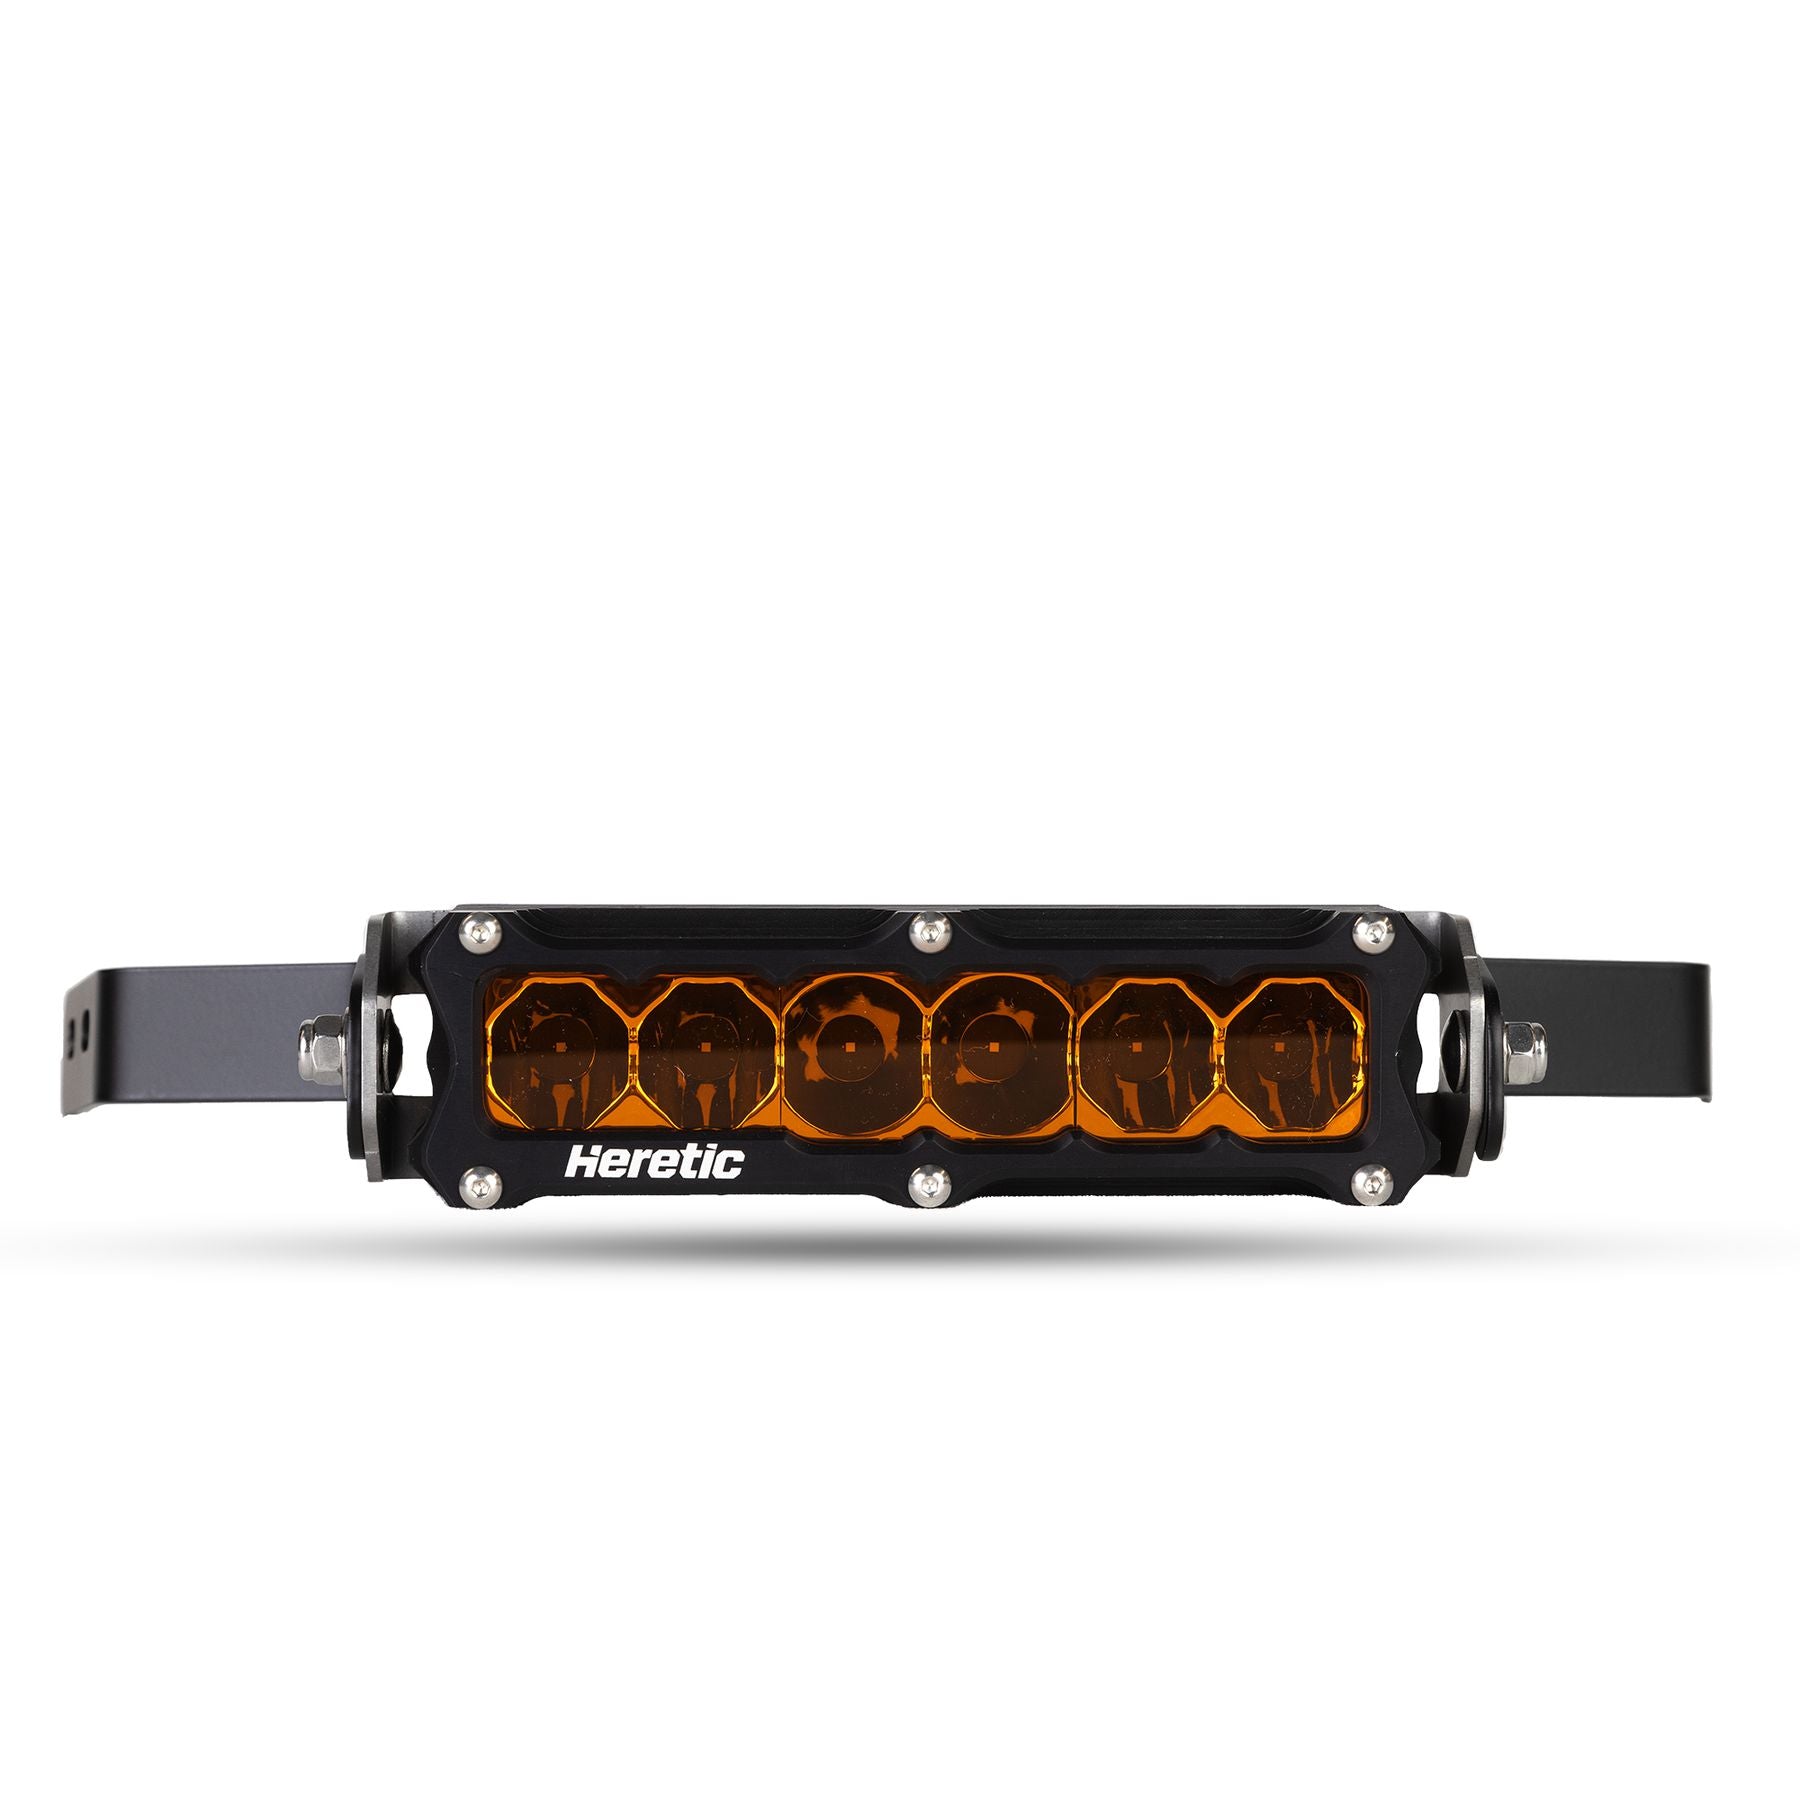 CAN AM MAVERICK X3 6" HOOD SCOOP LED LIGHT BAR-Light Bar-Heretic Studio-Spot-Clear-Wiring Harness: 30" and Below for Single Light Bar (up to 180W) + $49.99-Black Market UTV